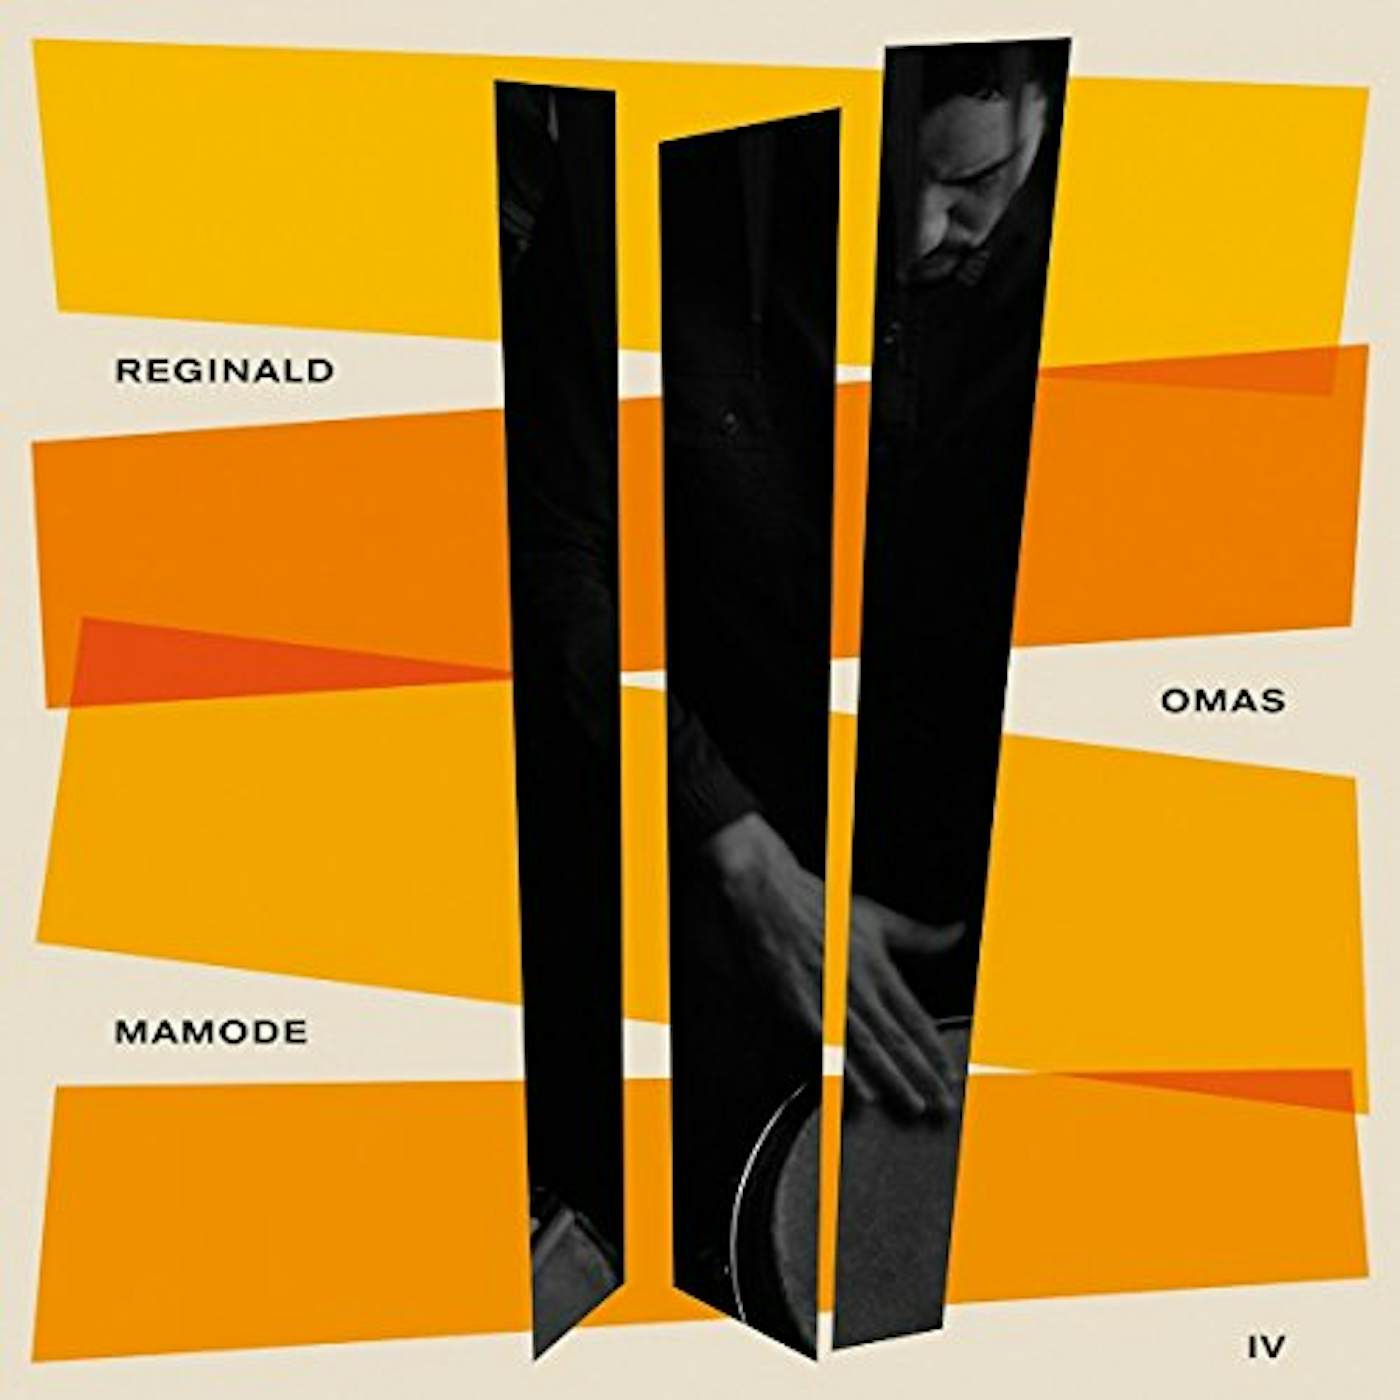 REGINALD OMAS MAMODE IV CD